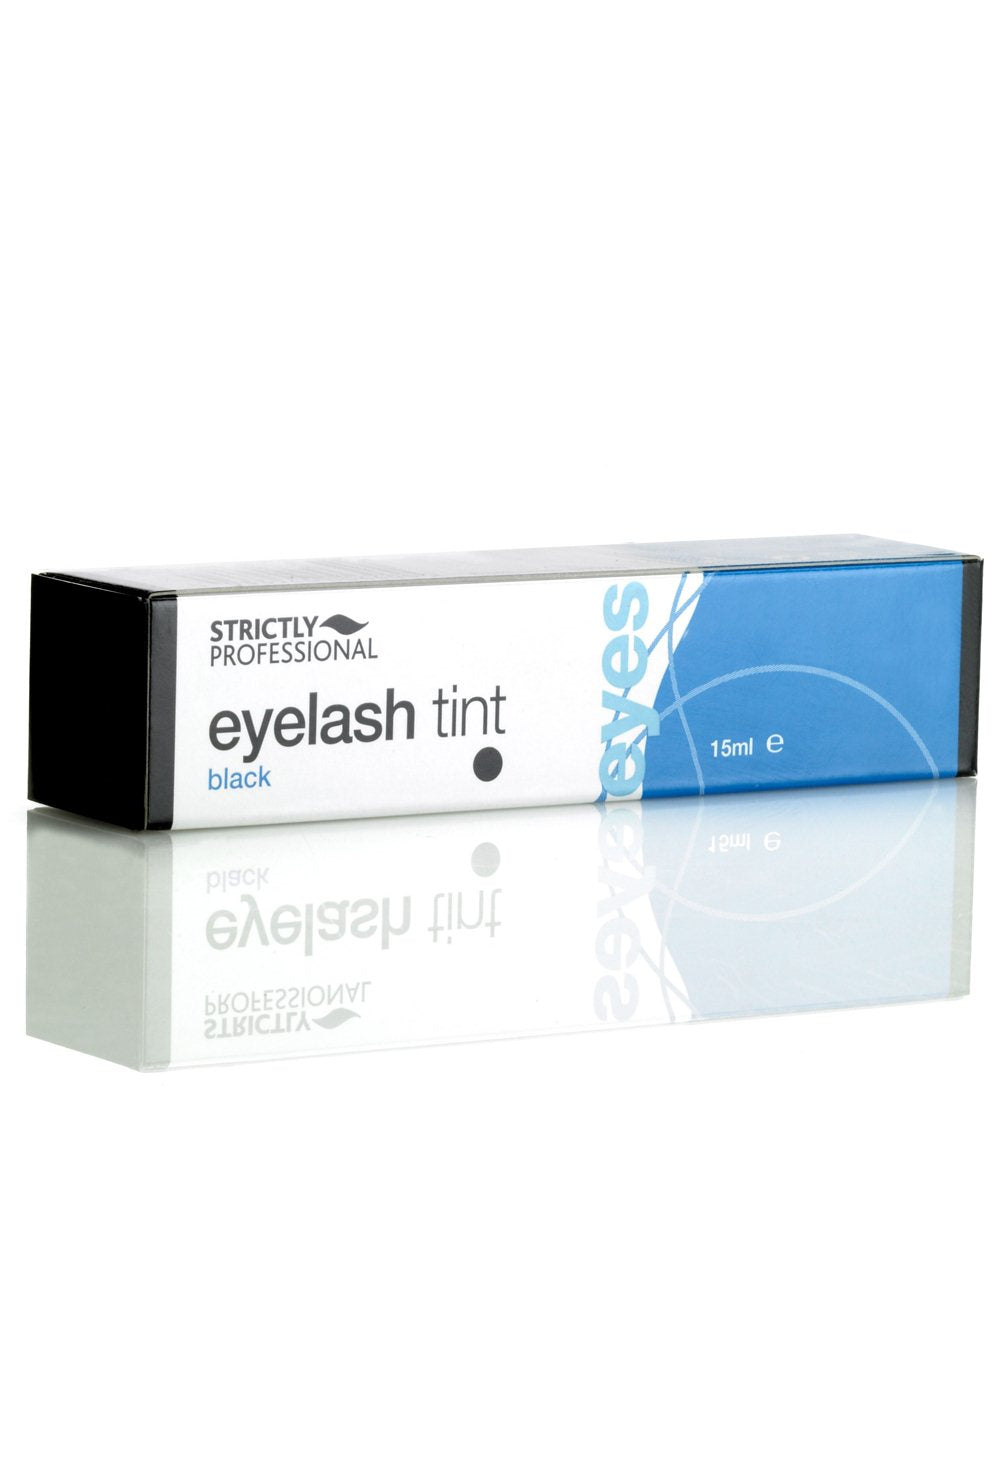 Strictly Professional Eyelash Tint Black (15ml)